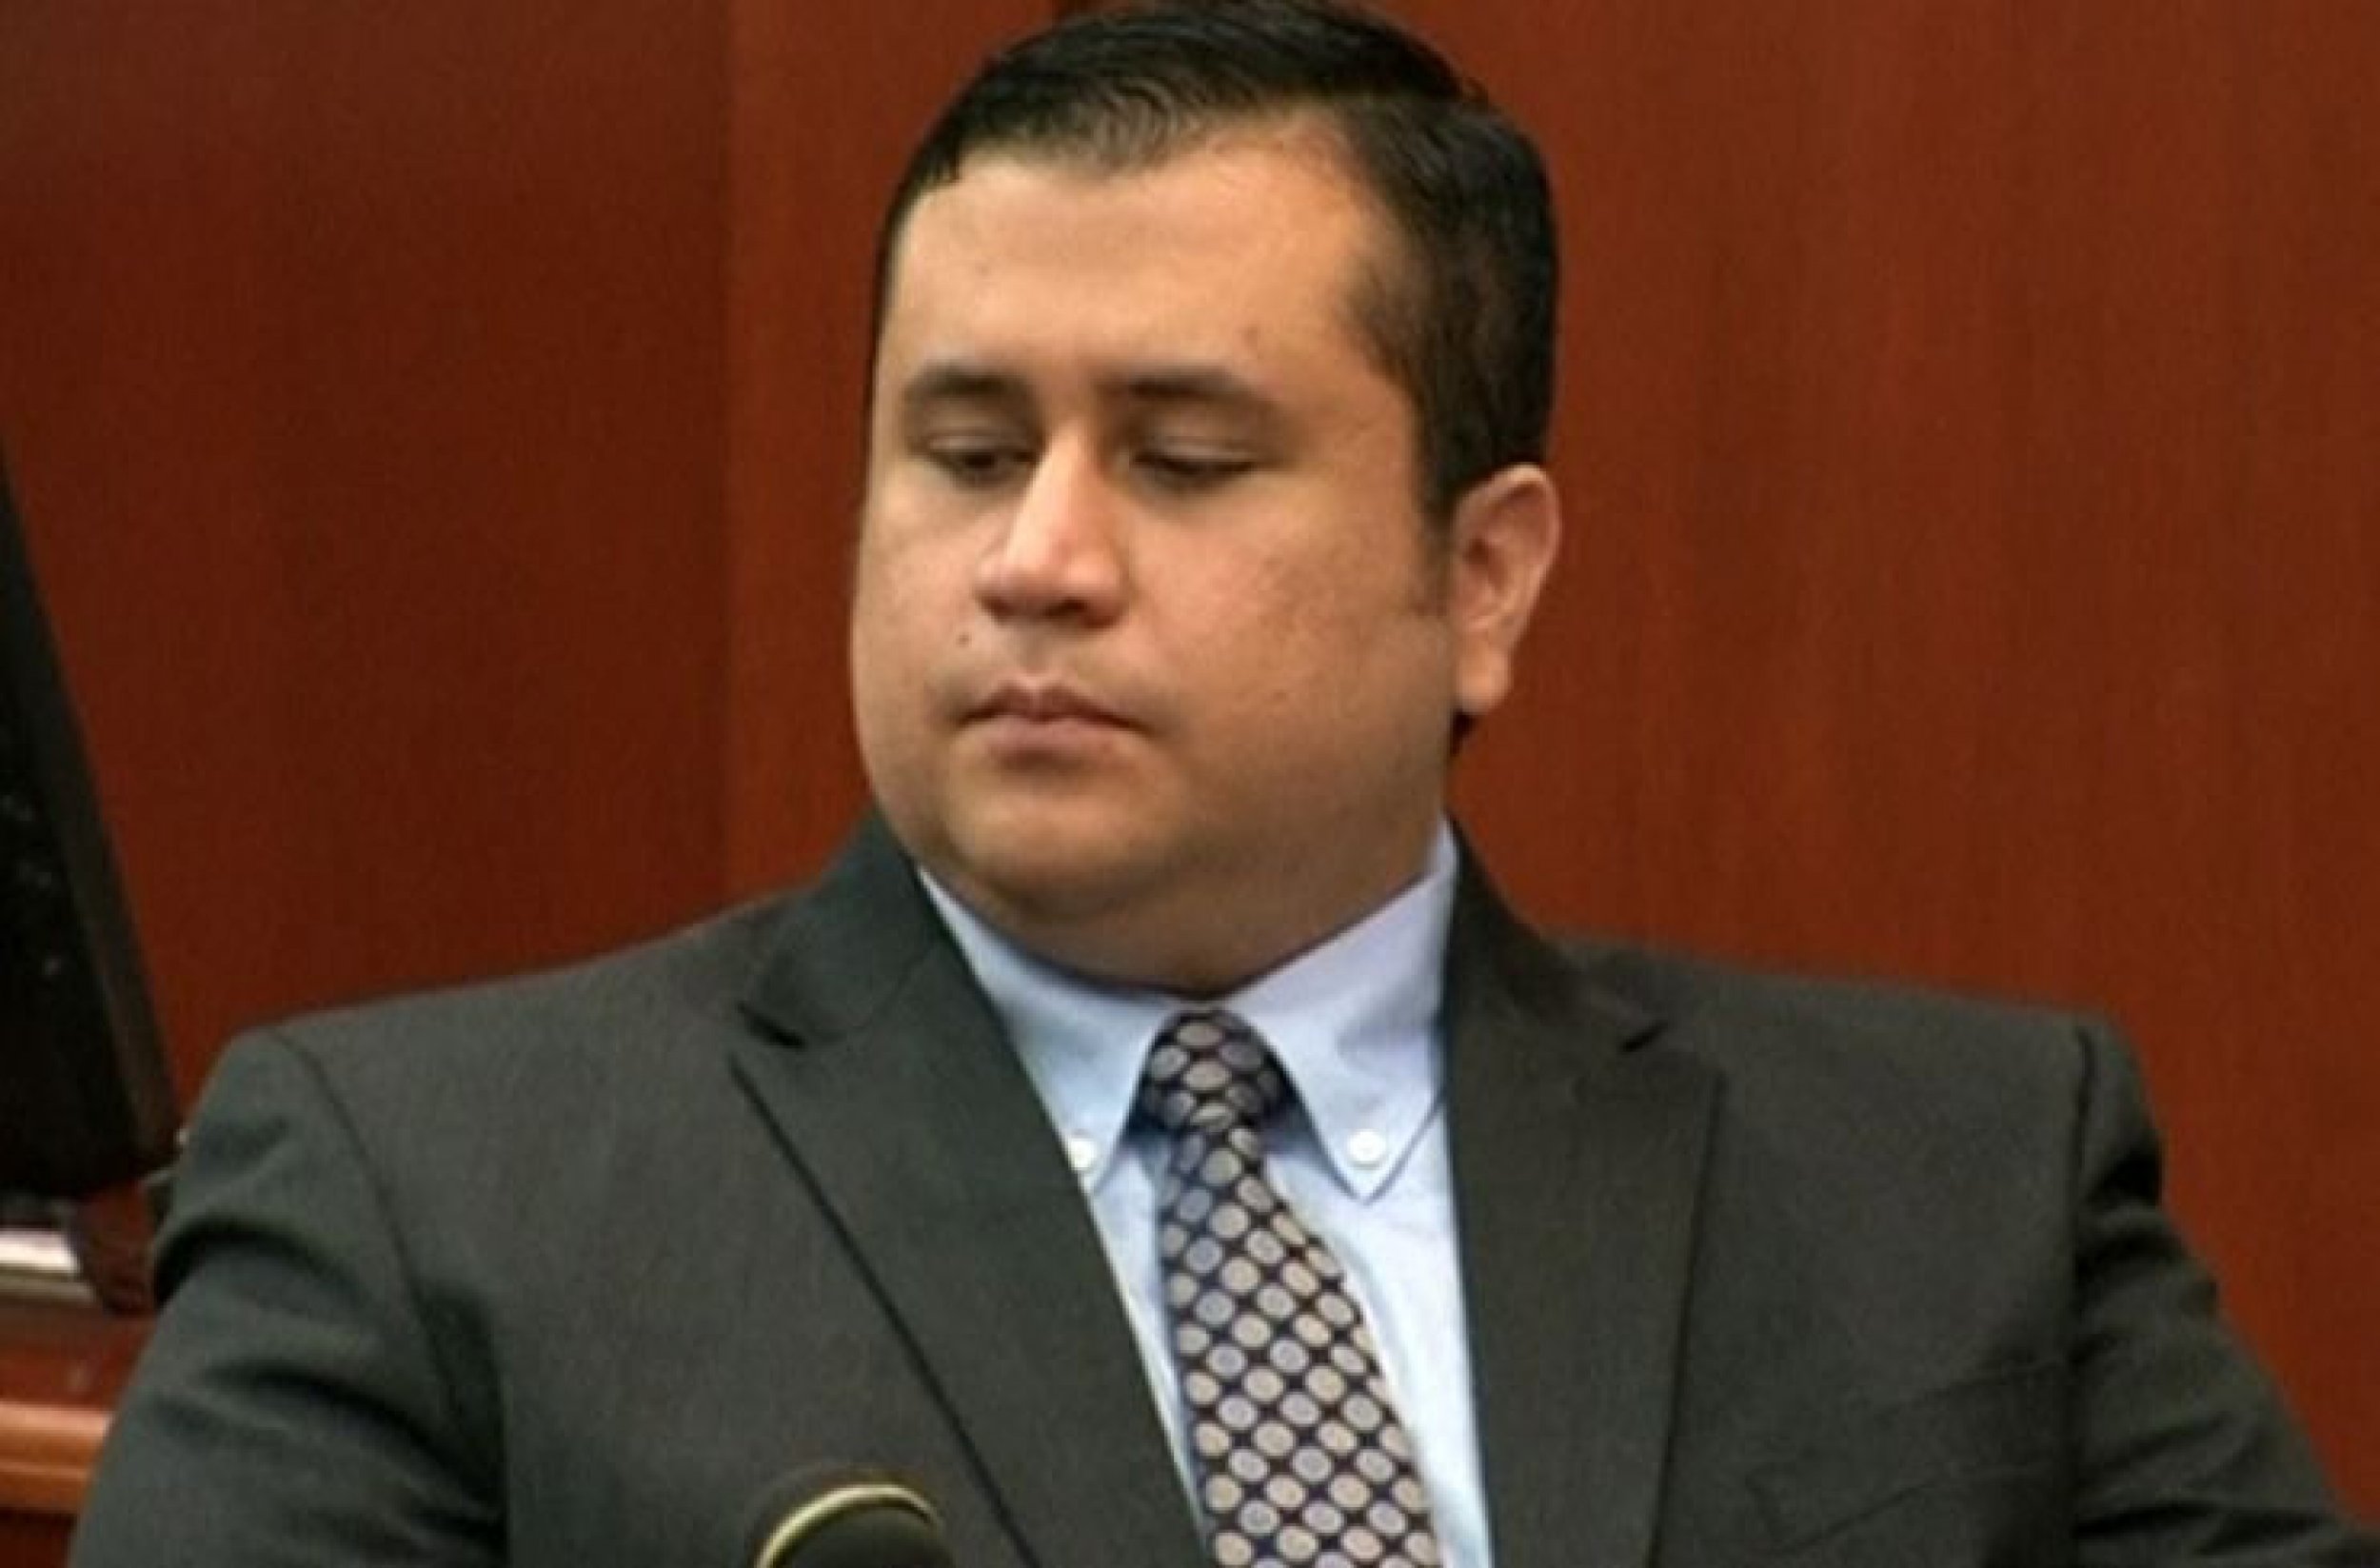 Watch George Zimmermans Lawyer Tell Awkward Knock-Knock Joke At Trayvon Martin Murder Trial